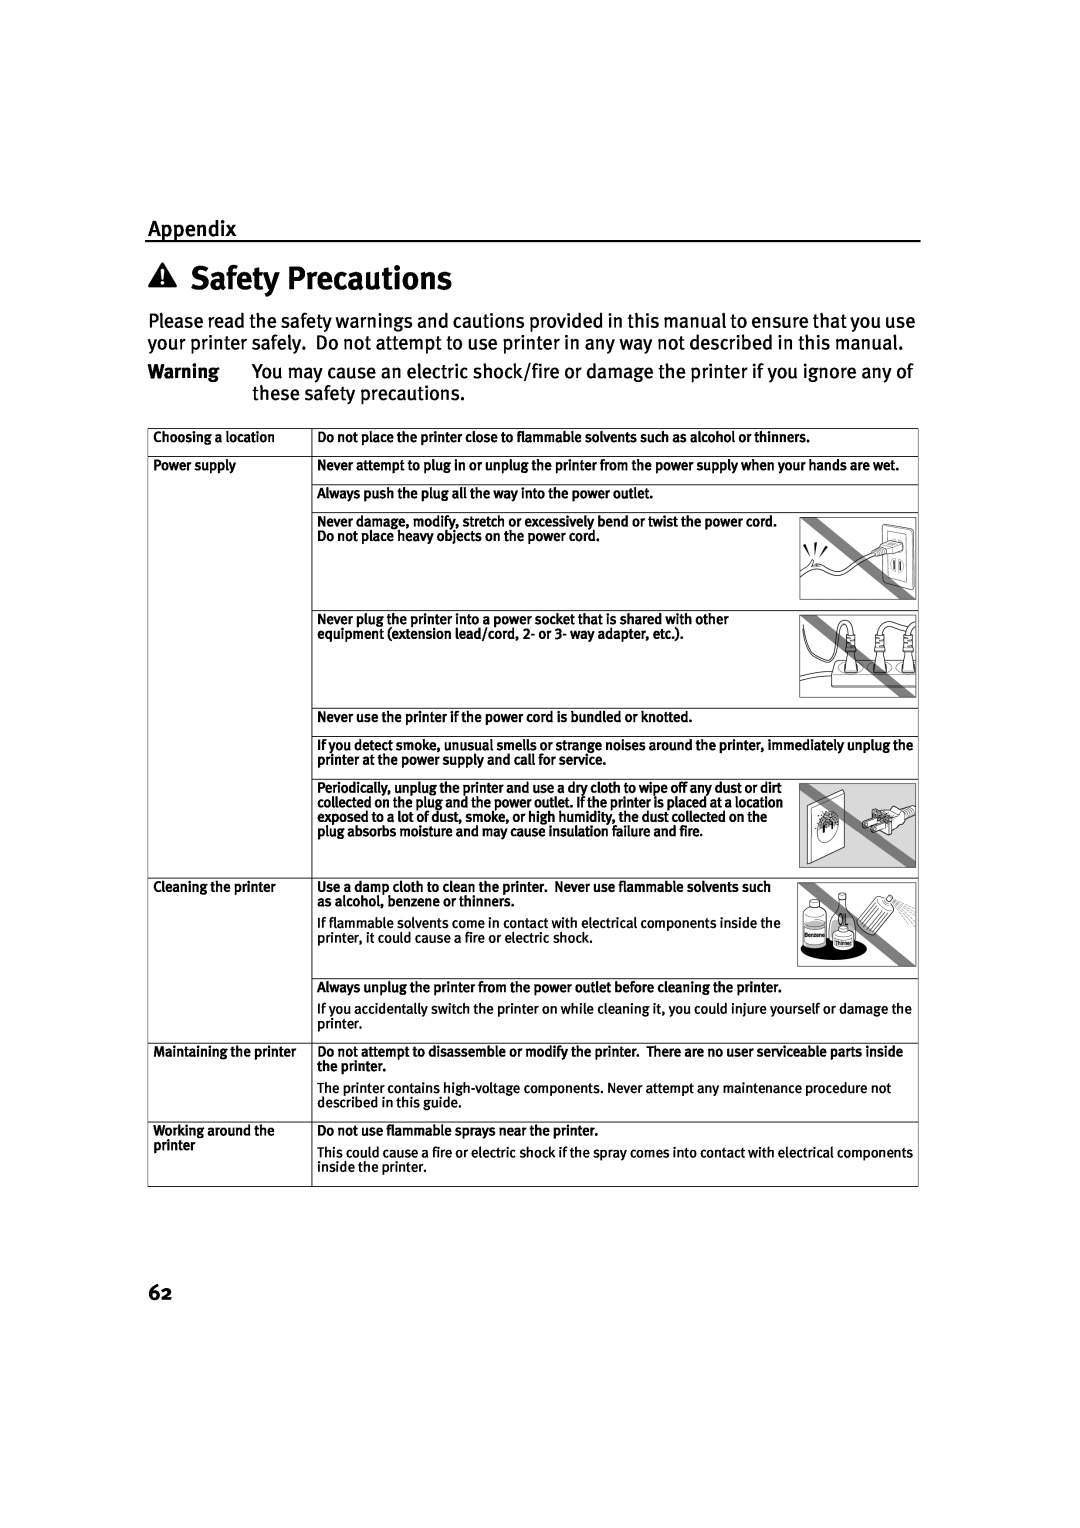 Canon IP1500 quick start Safety Precautions, Appendix 